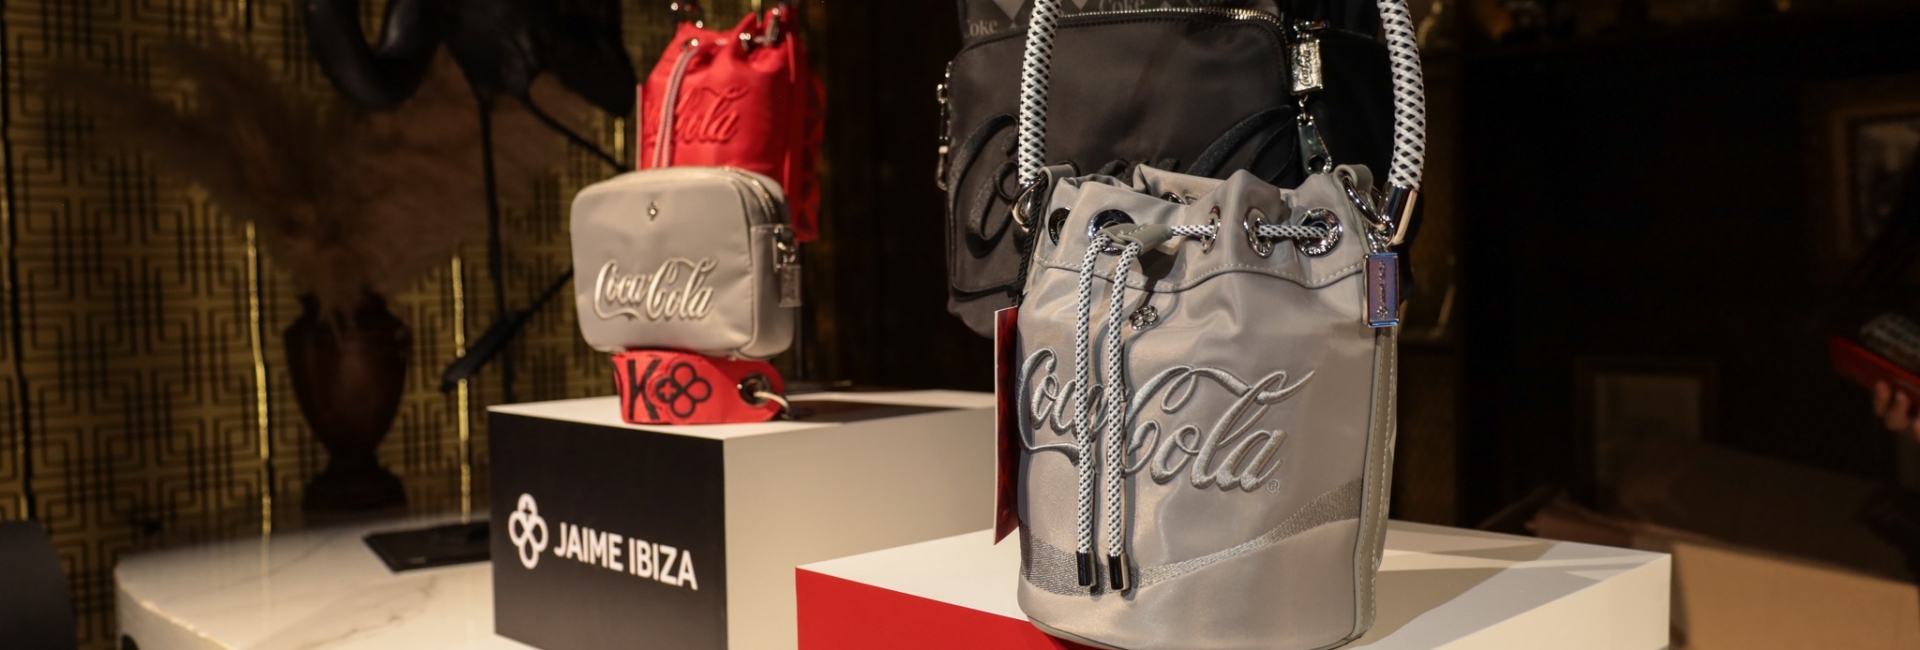 Jaime Ibiza re imagina la Coca Cola 